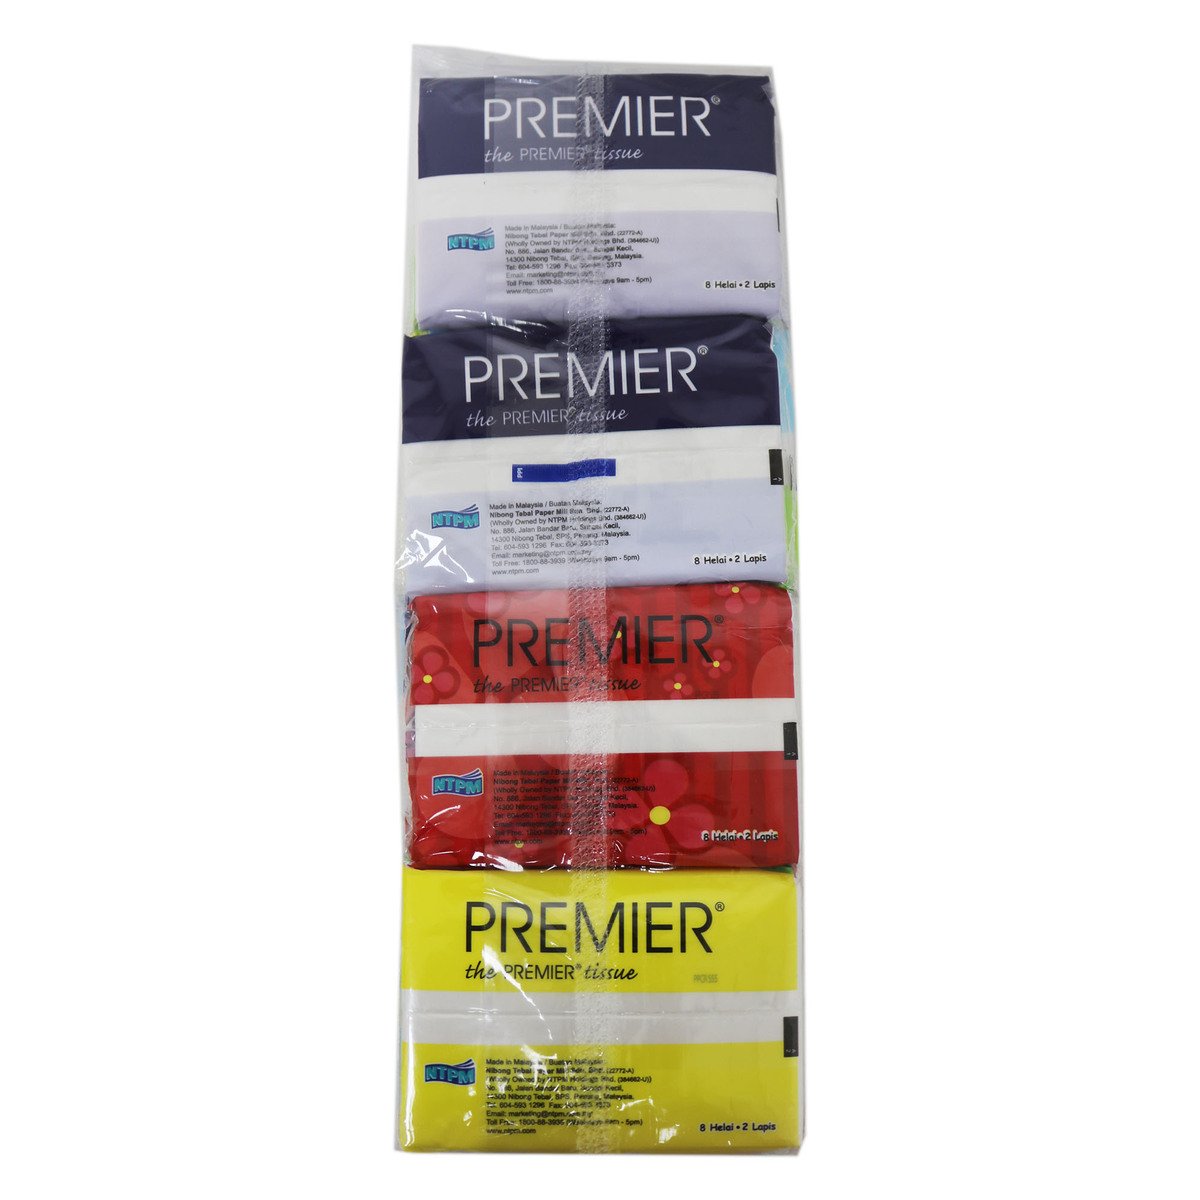 Premier Pocket Tissue 16 x 8sheets